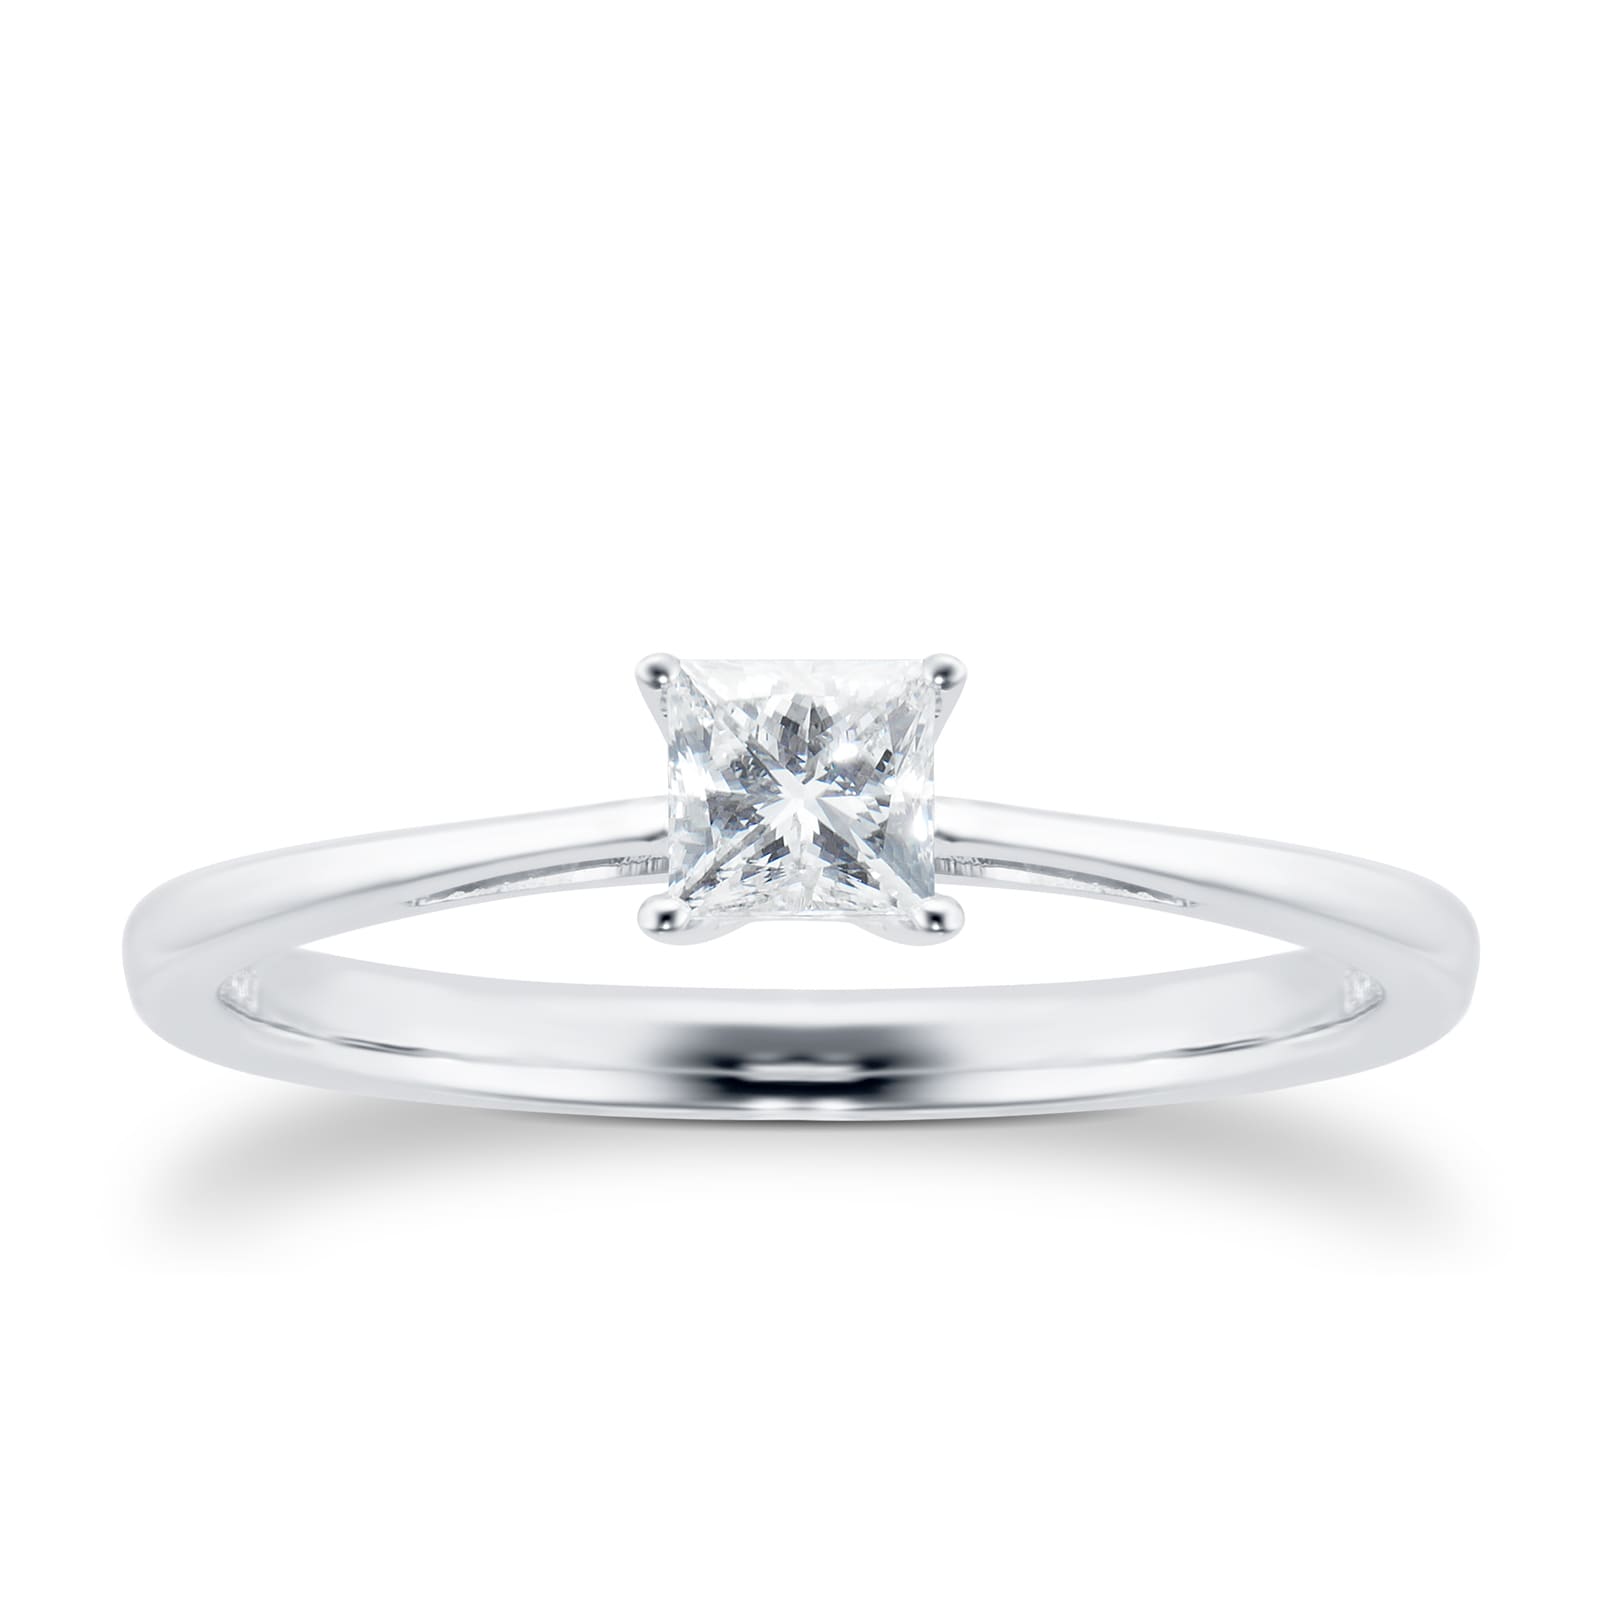 18ct white gold 0.25ct princess cut diamond engagement ring - ring size p